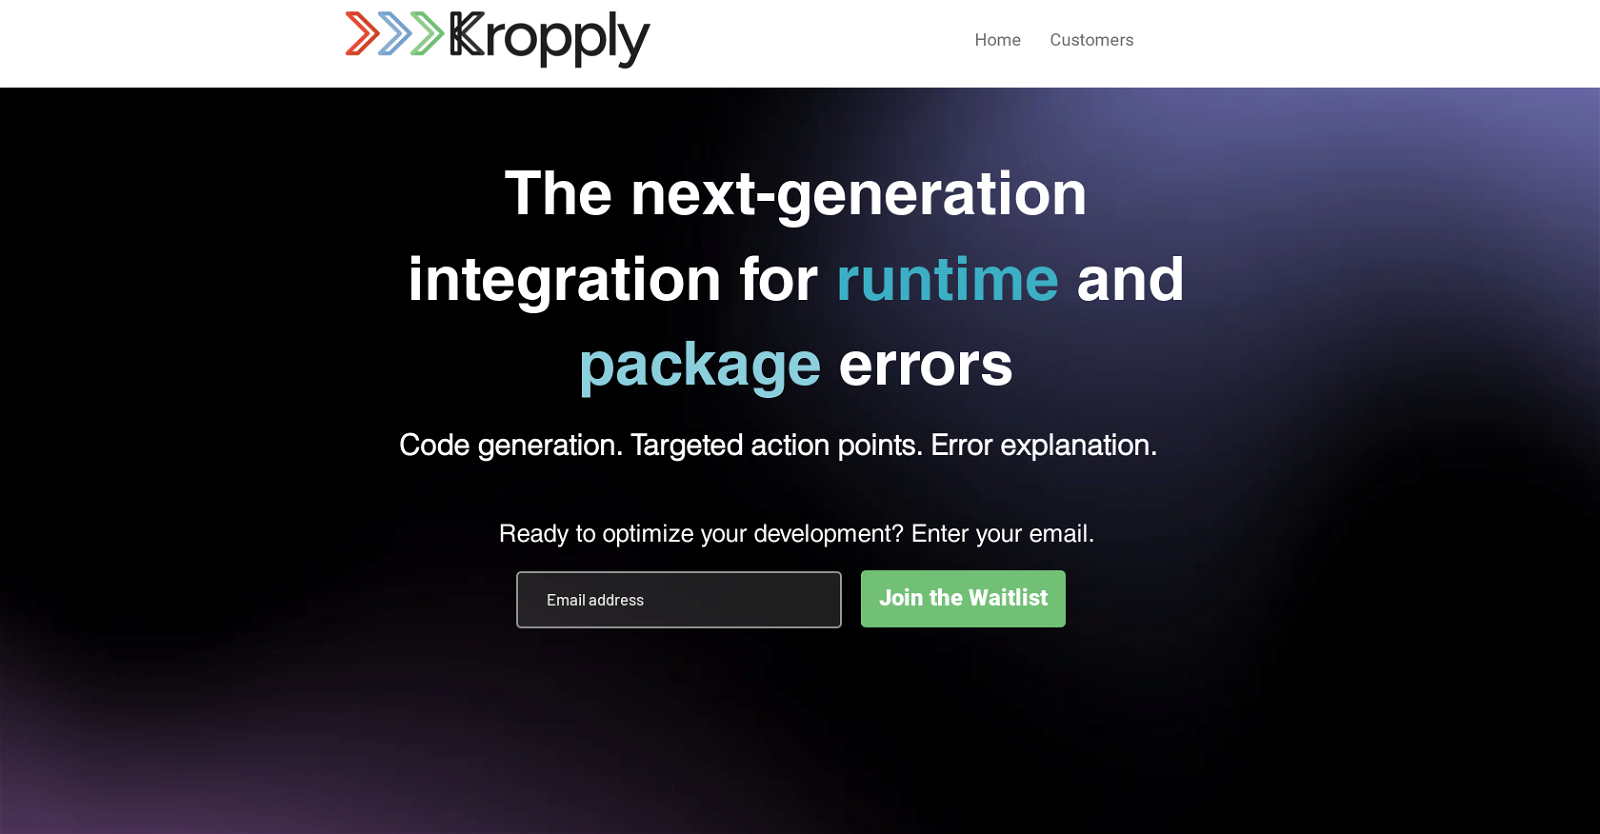 Kropply website